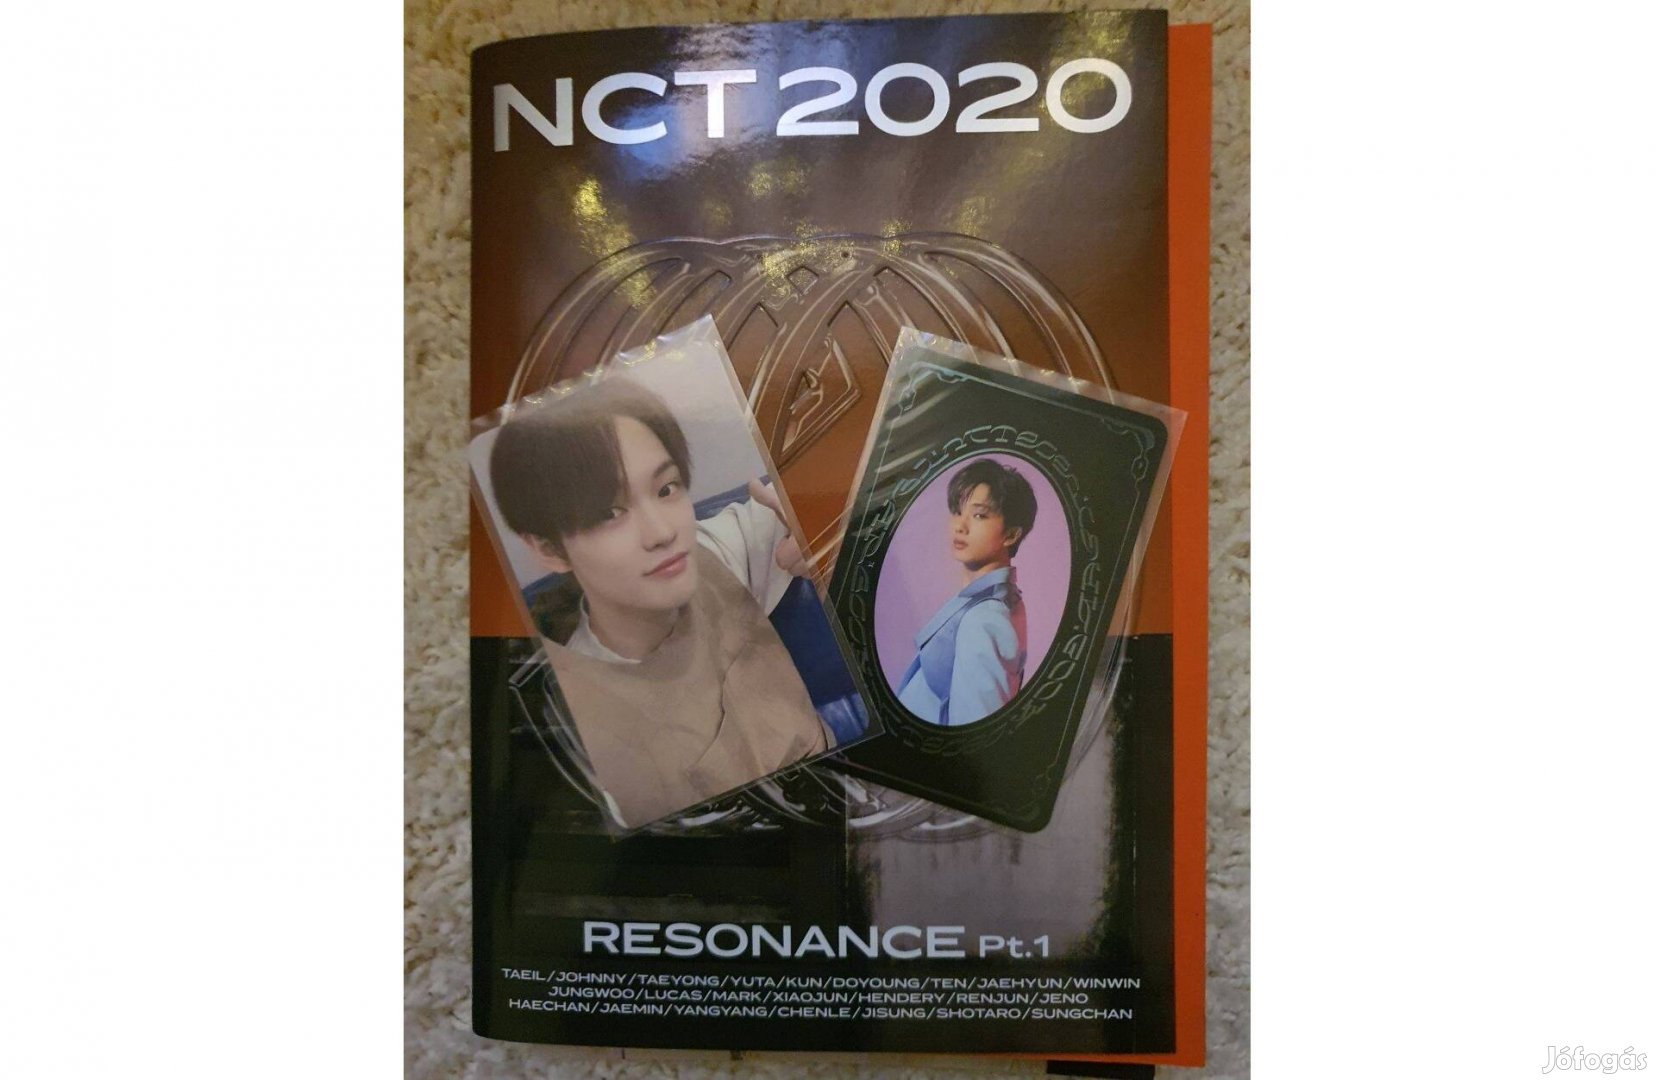 NCT 2020 Resonance Part 1, kpop CD album